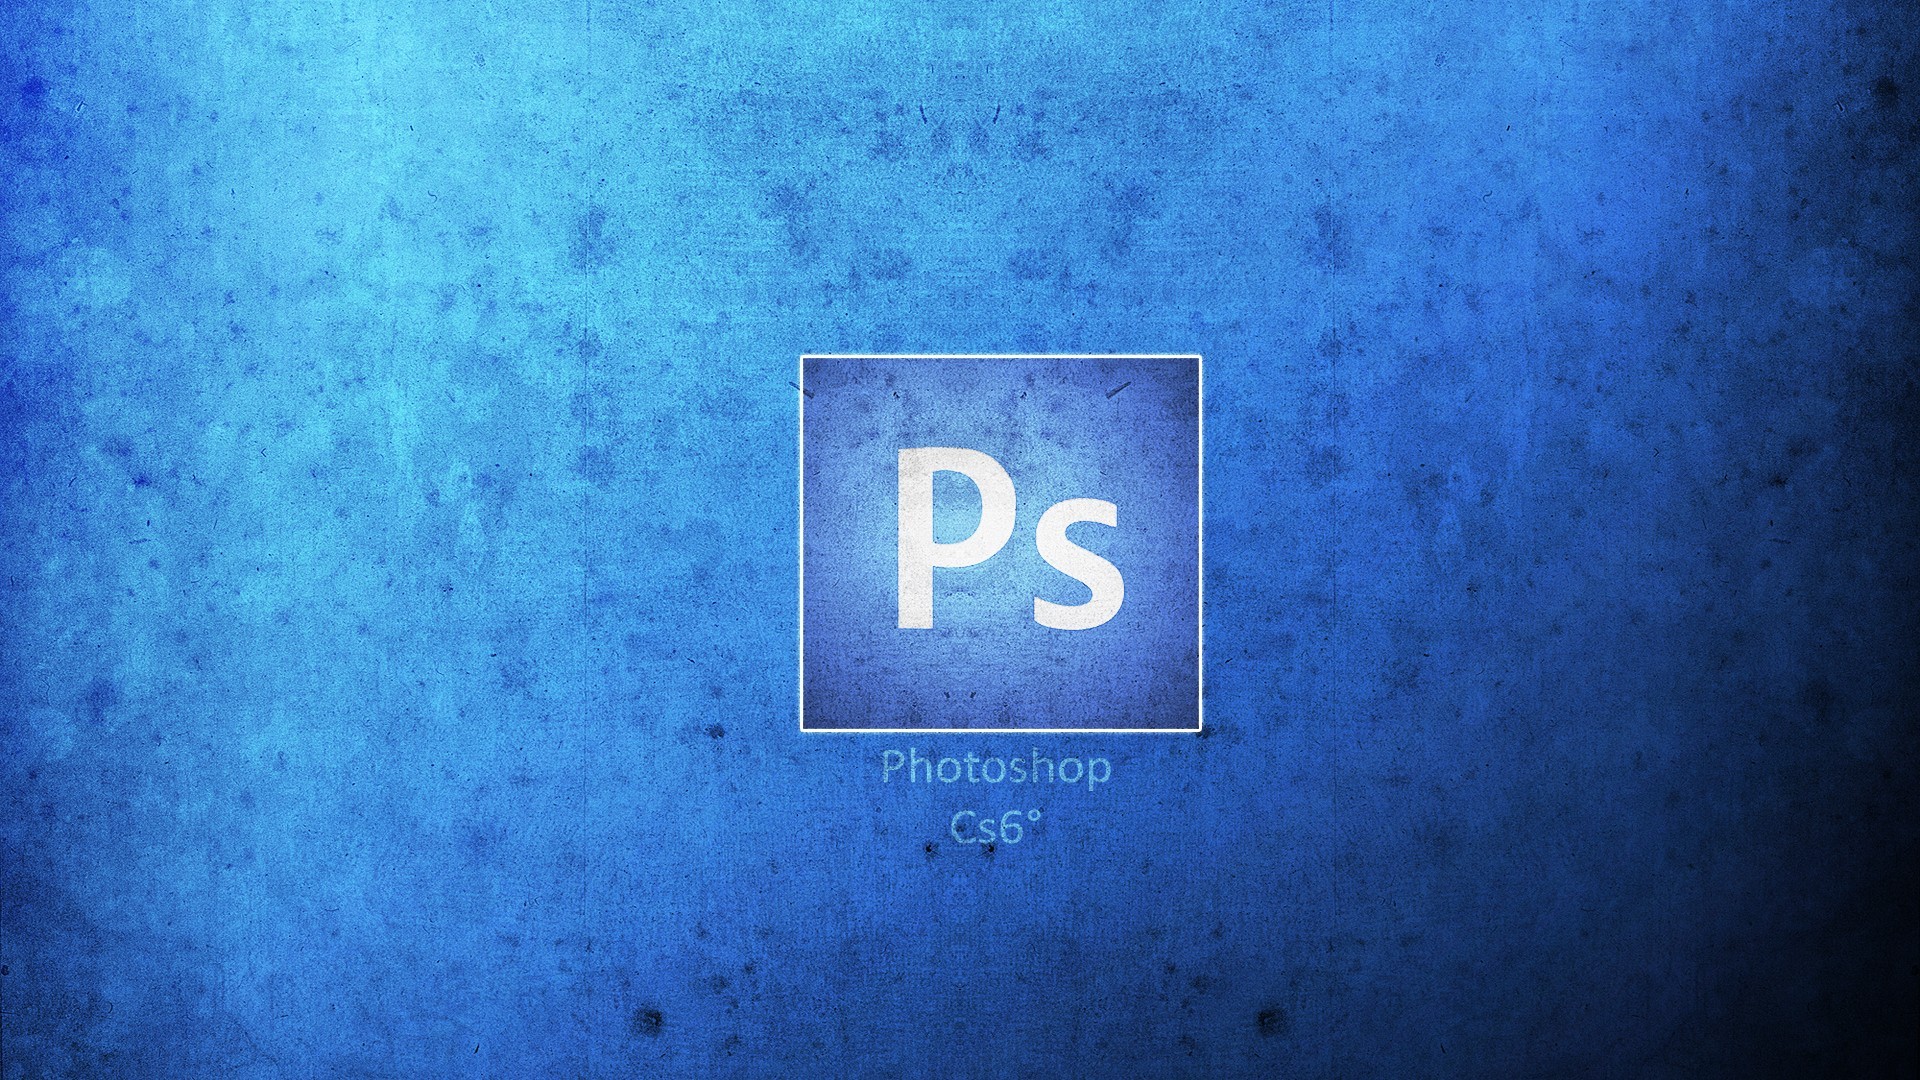 Adobe photoshop dmg download free